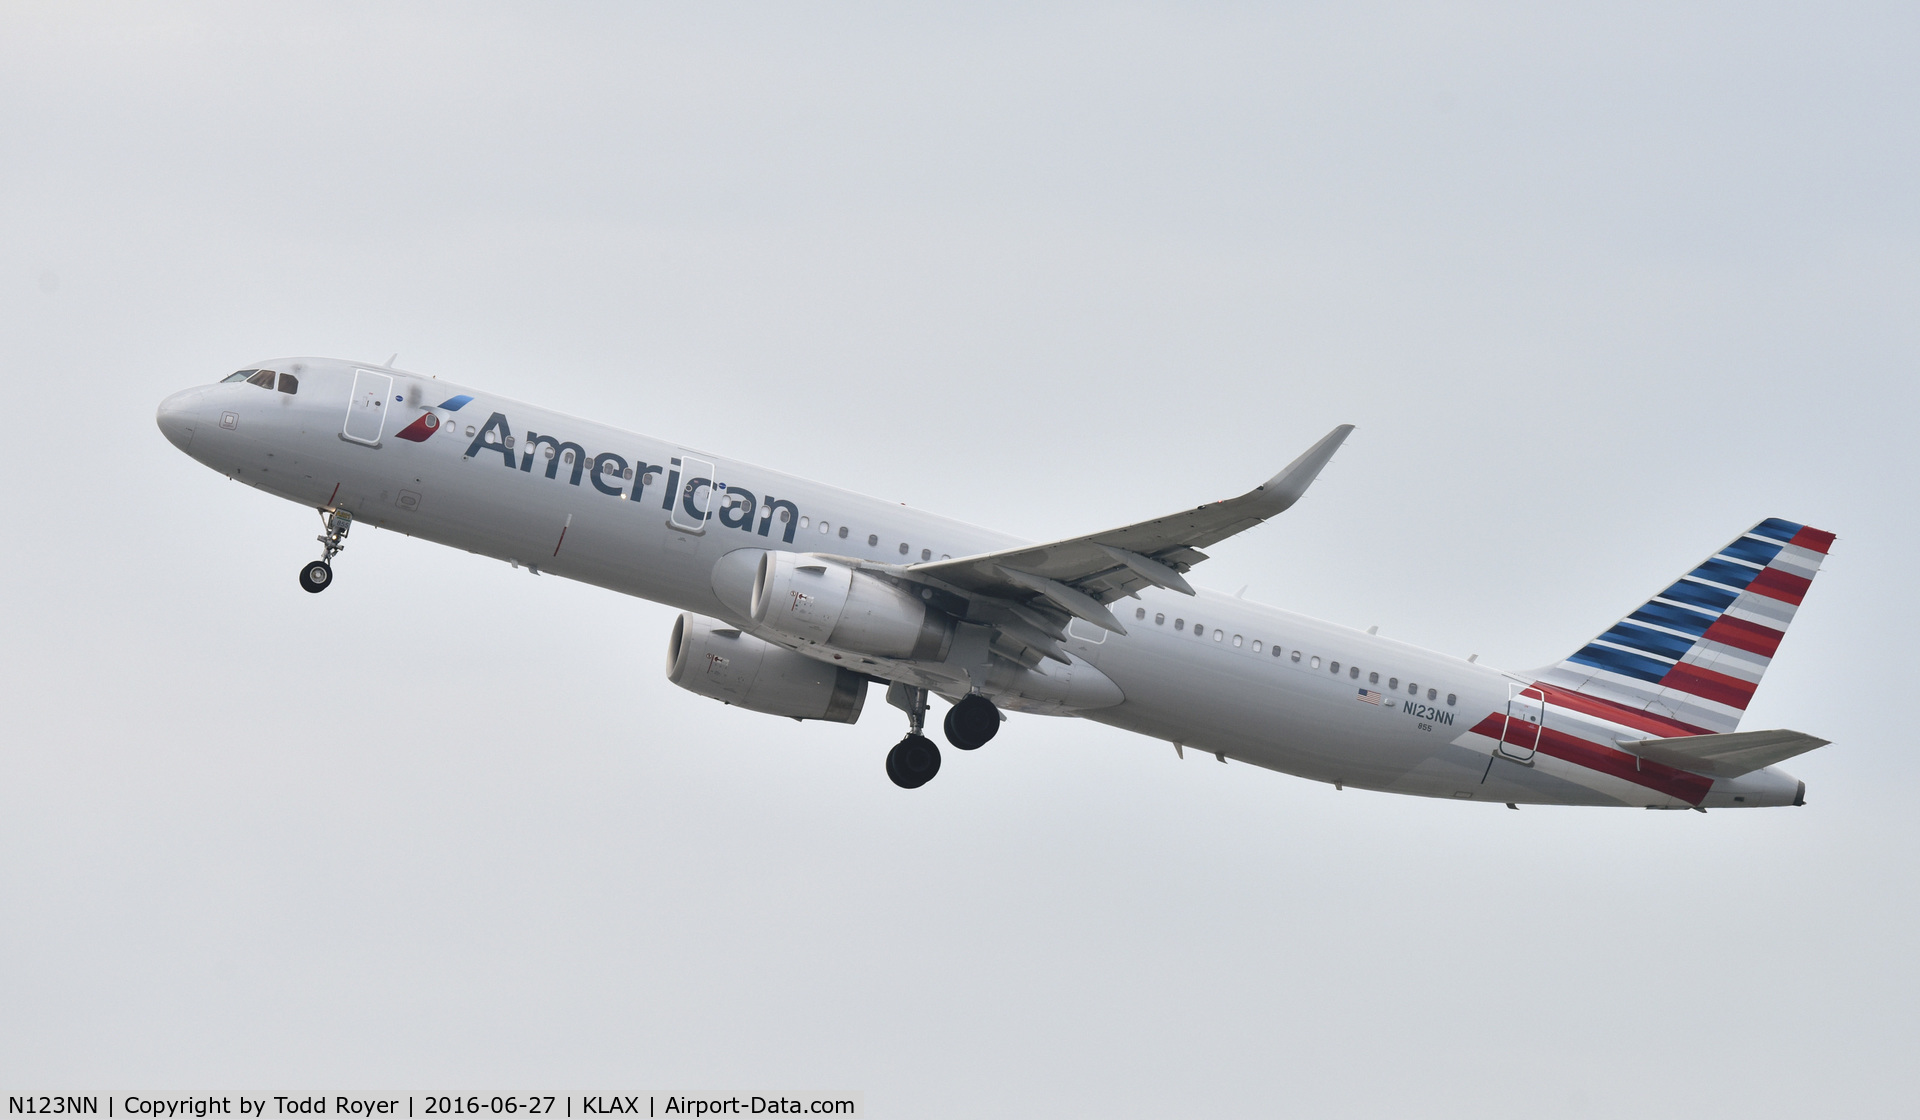 N123NN, 2014 Airbus A321-231 C/N 6256, Departing LAX on 25R